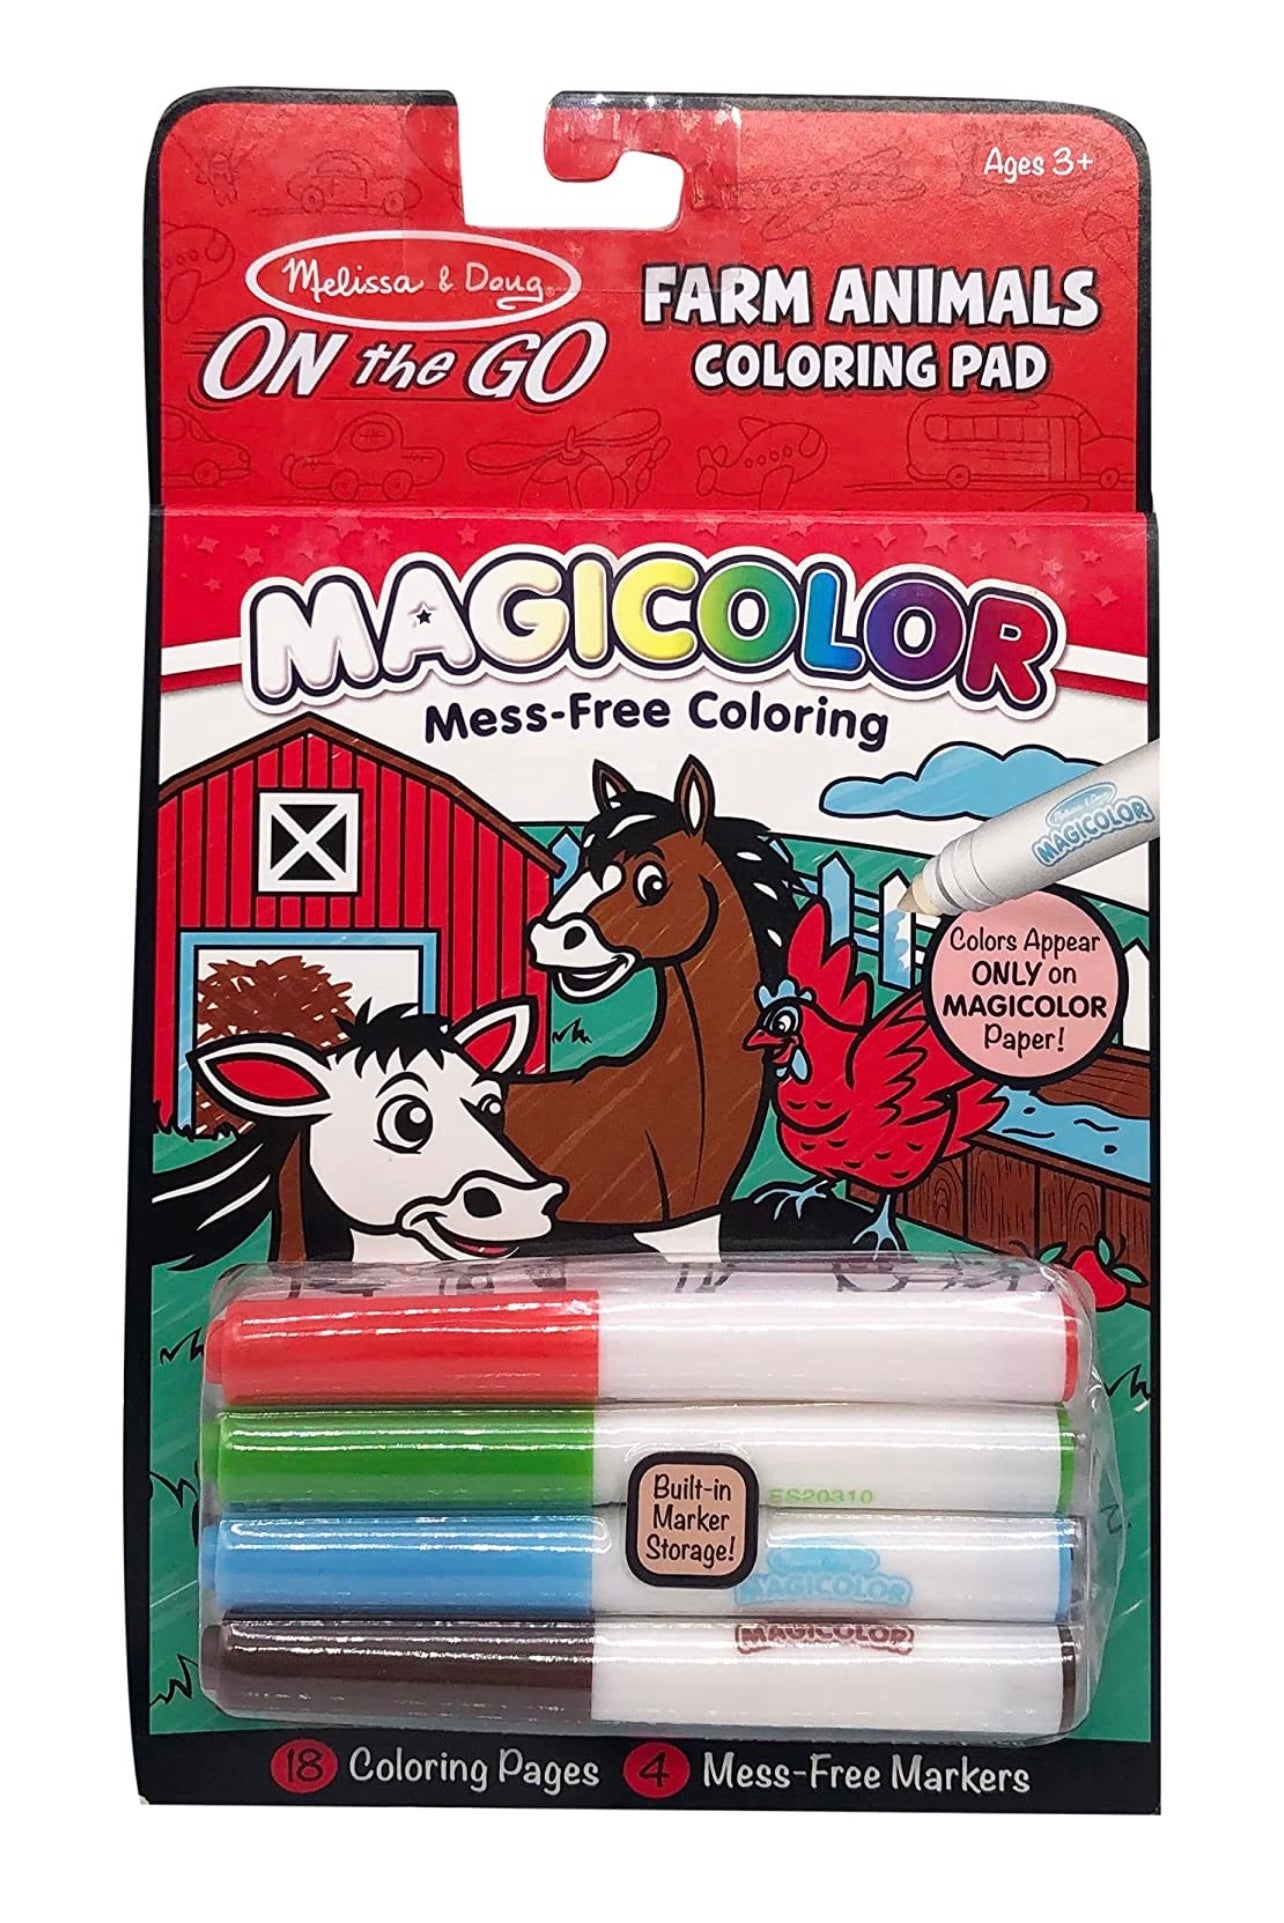 Melissa & Doug : MagiColor - on The Go - Princess Coloring Pad